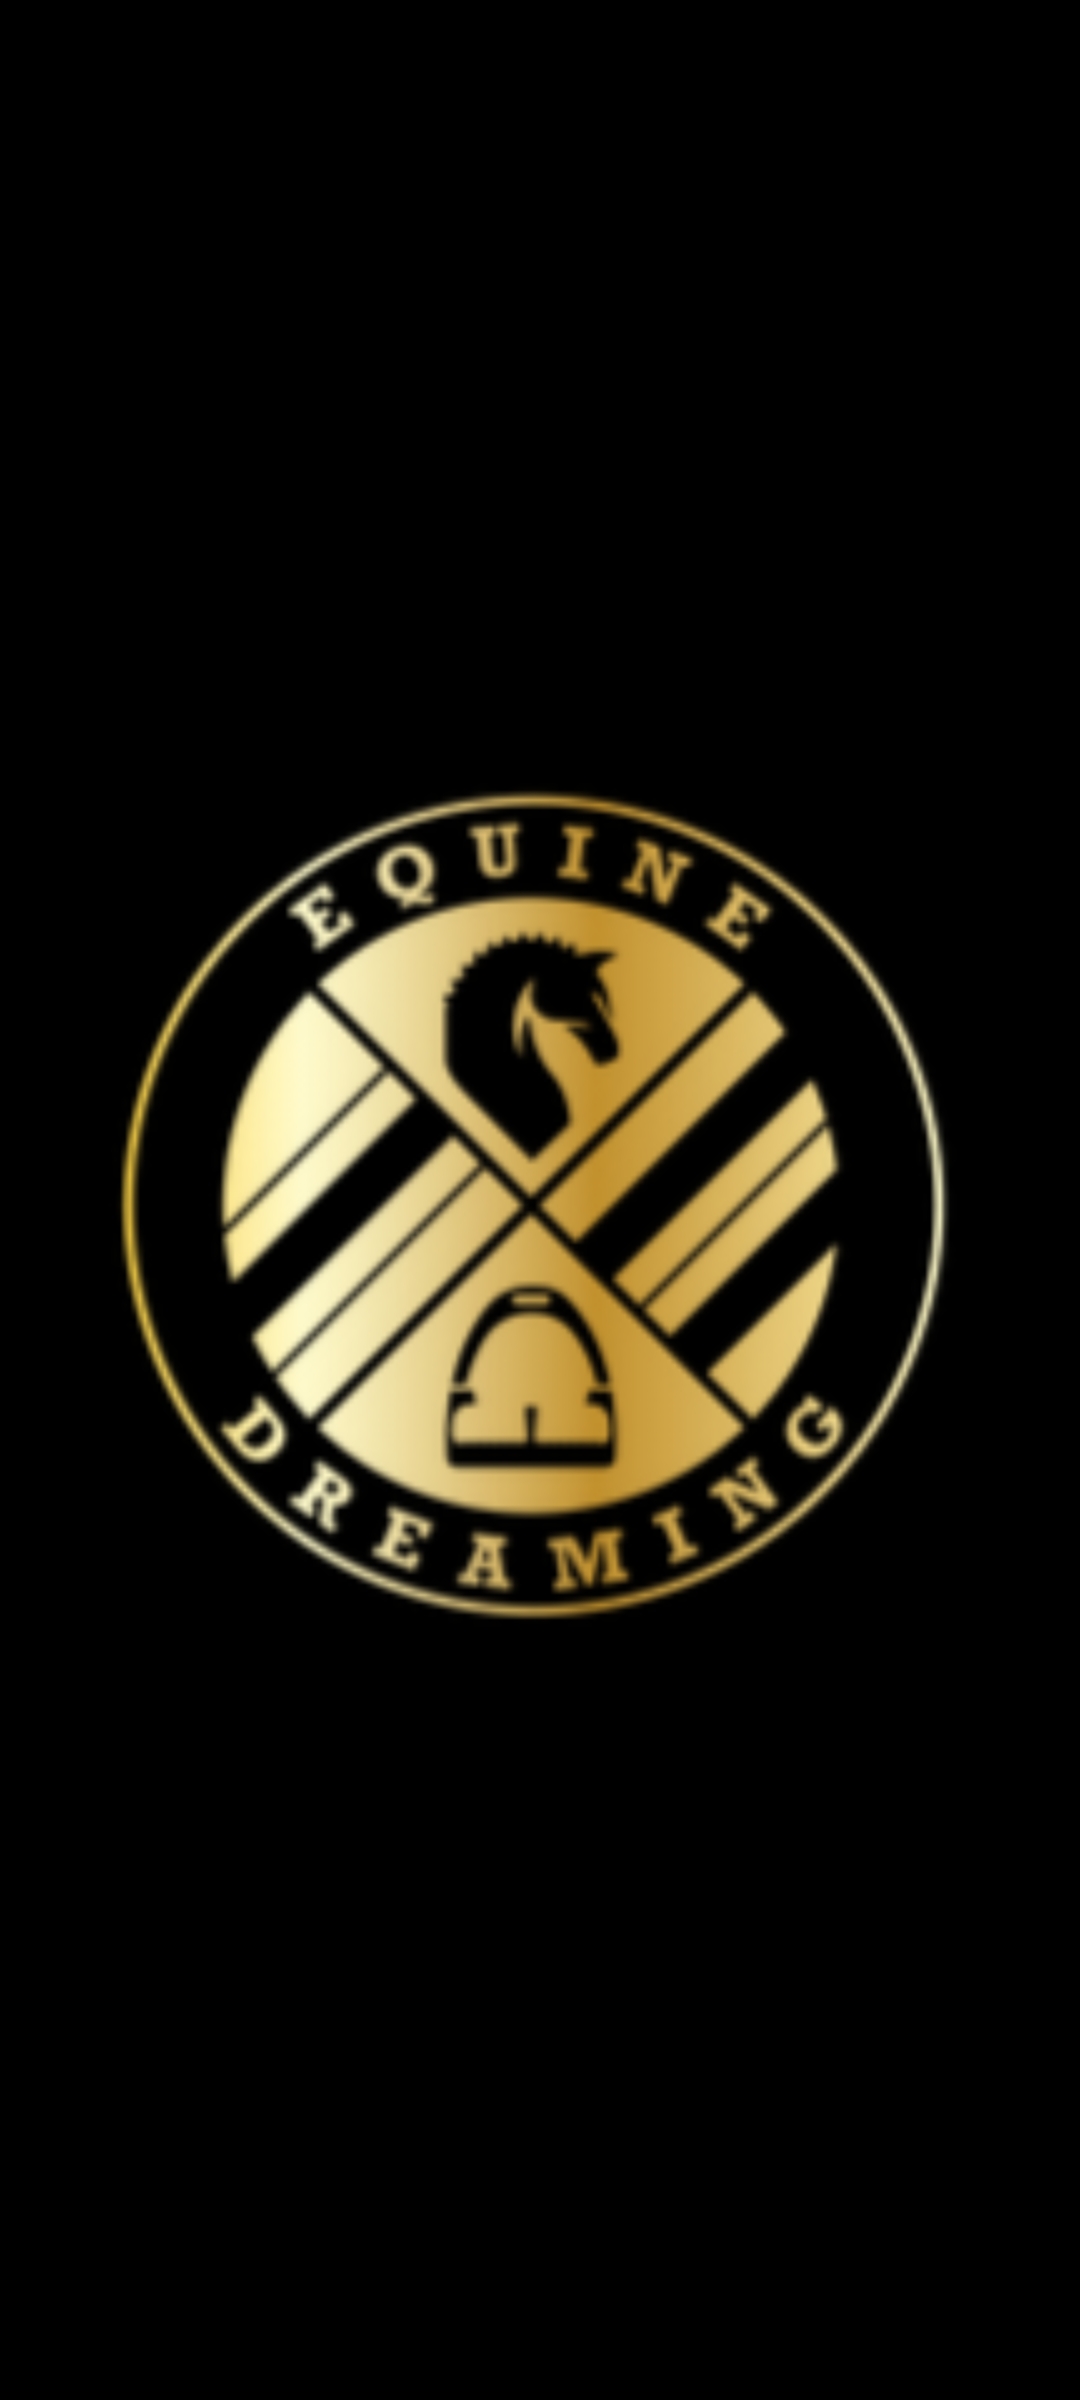 Equine Dreaming Coffee logo